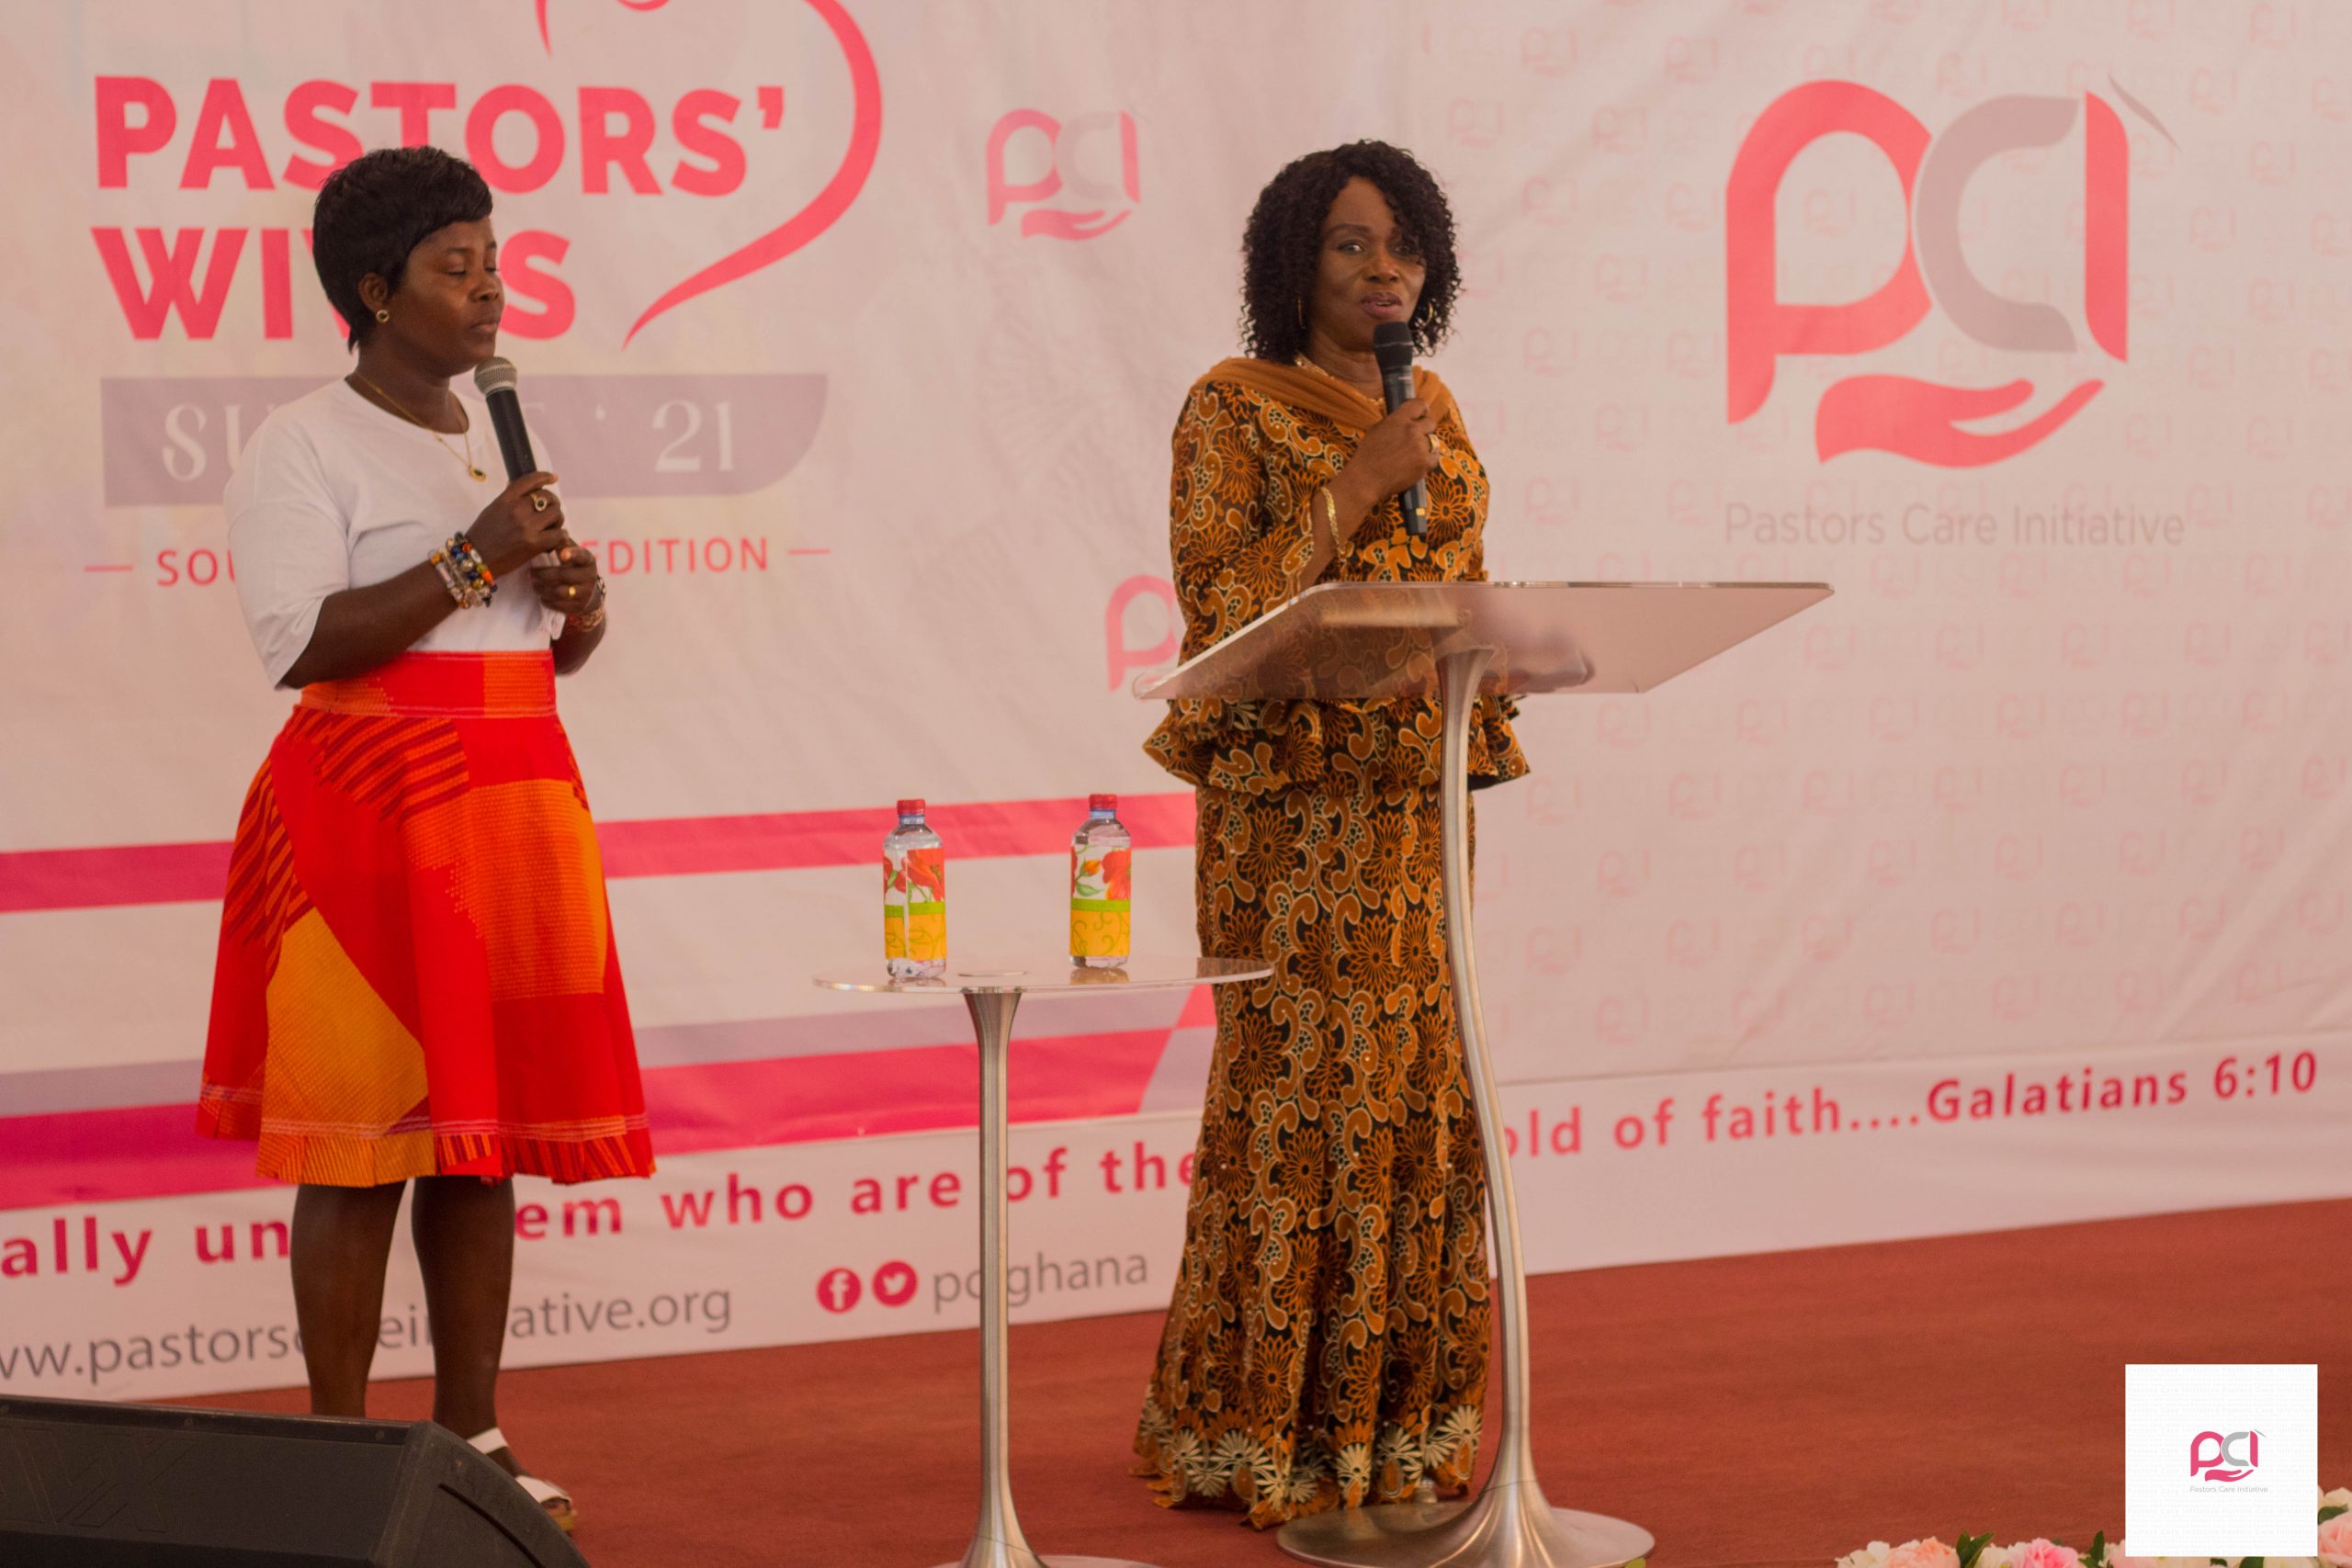 PCI’s Pastors Wives’ Summit held in Accra